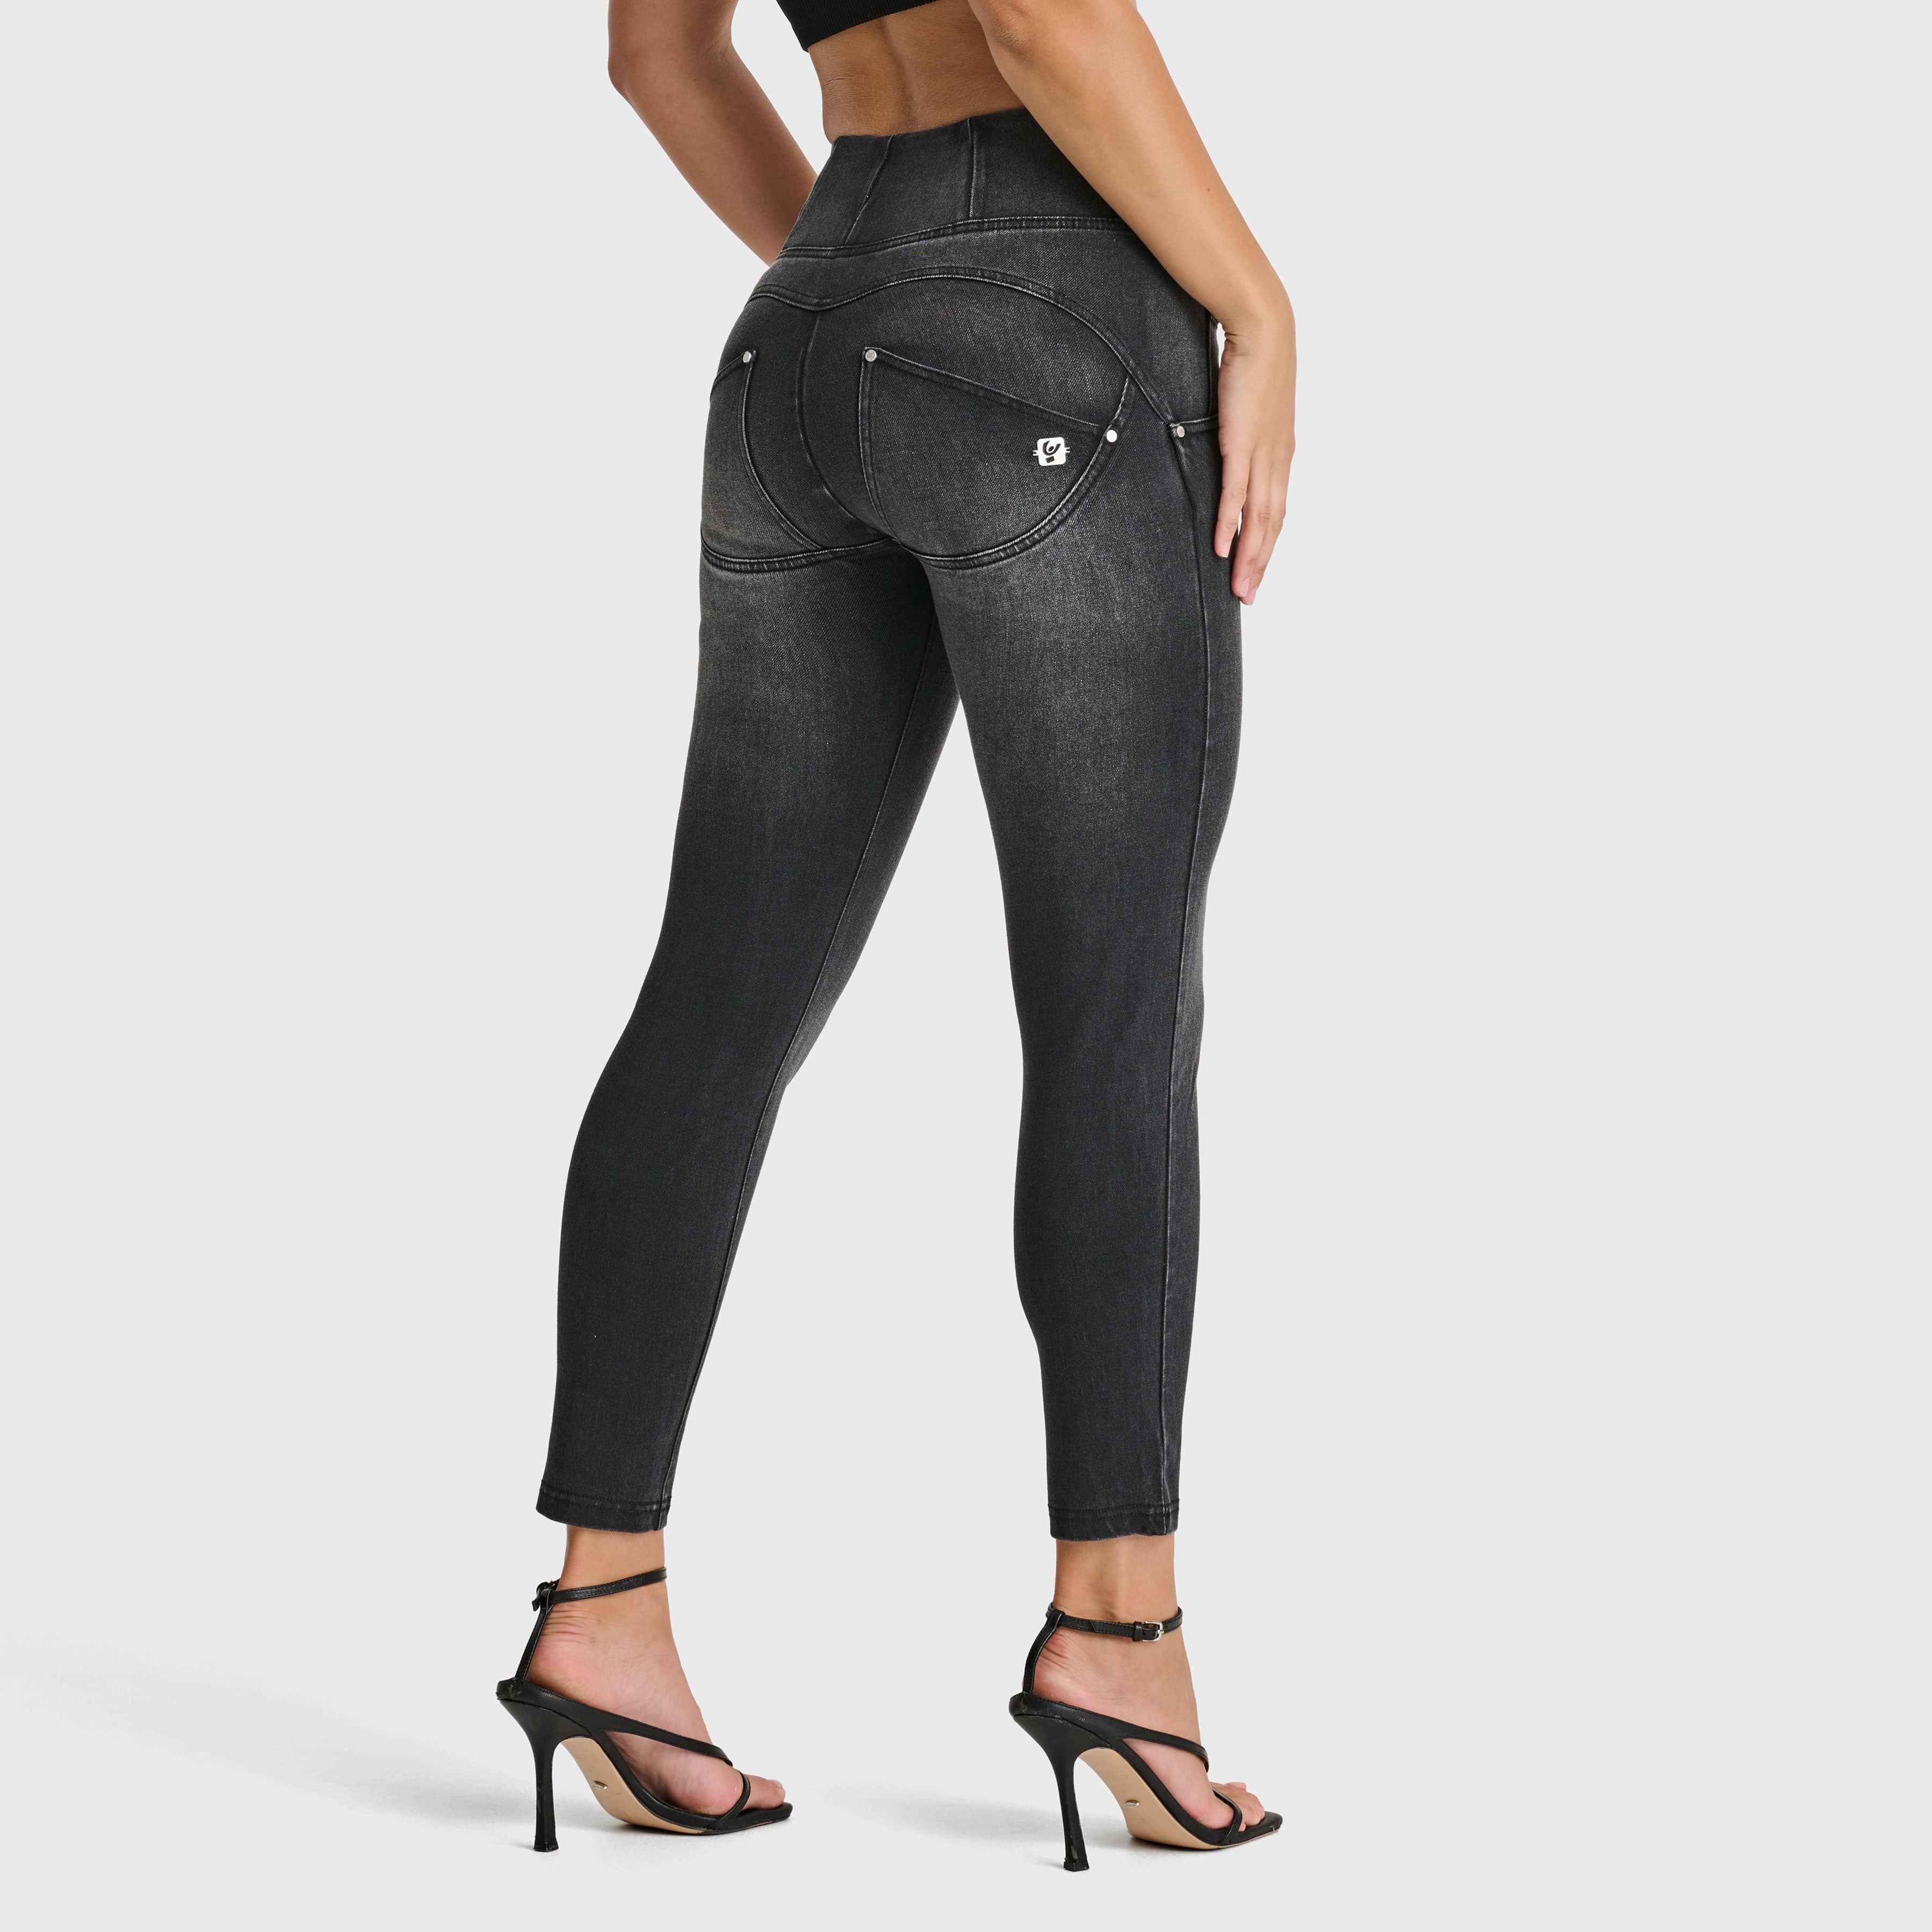 WR.UP® Snug Jeans - High Waisted - 7/8 Length - Black + Black Stitching 1